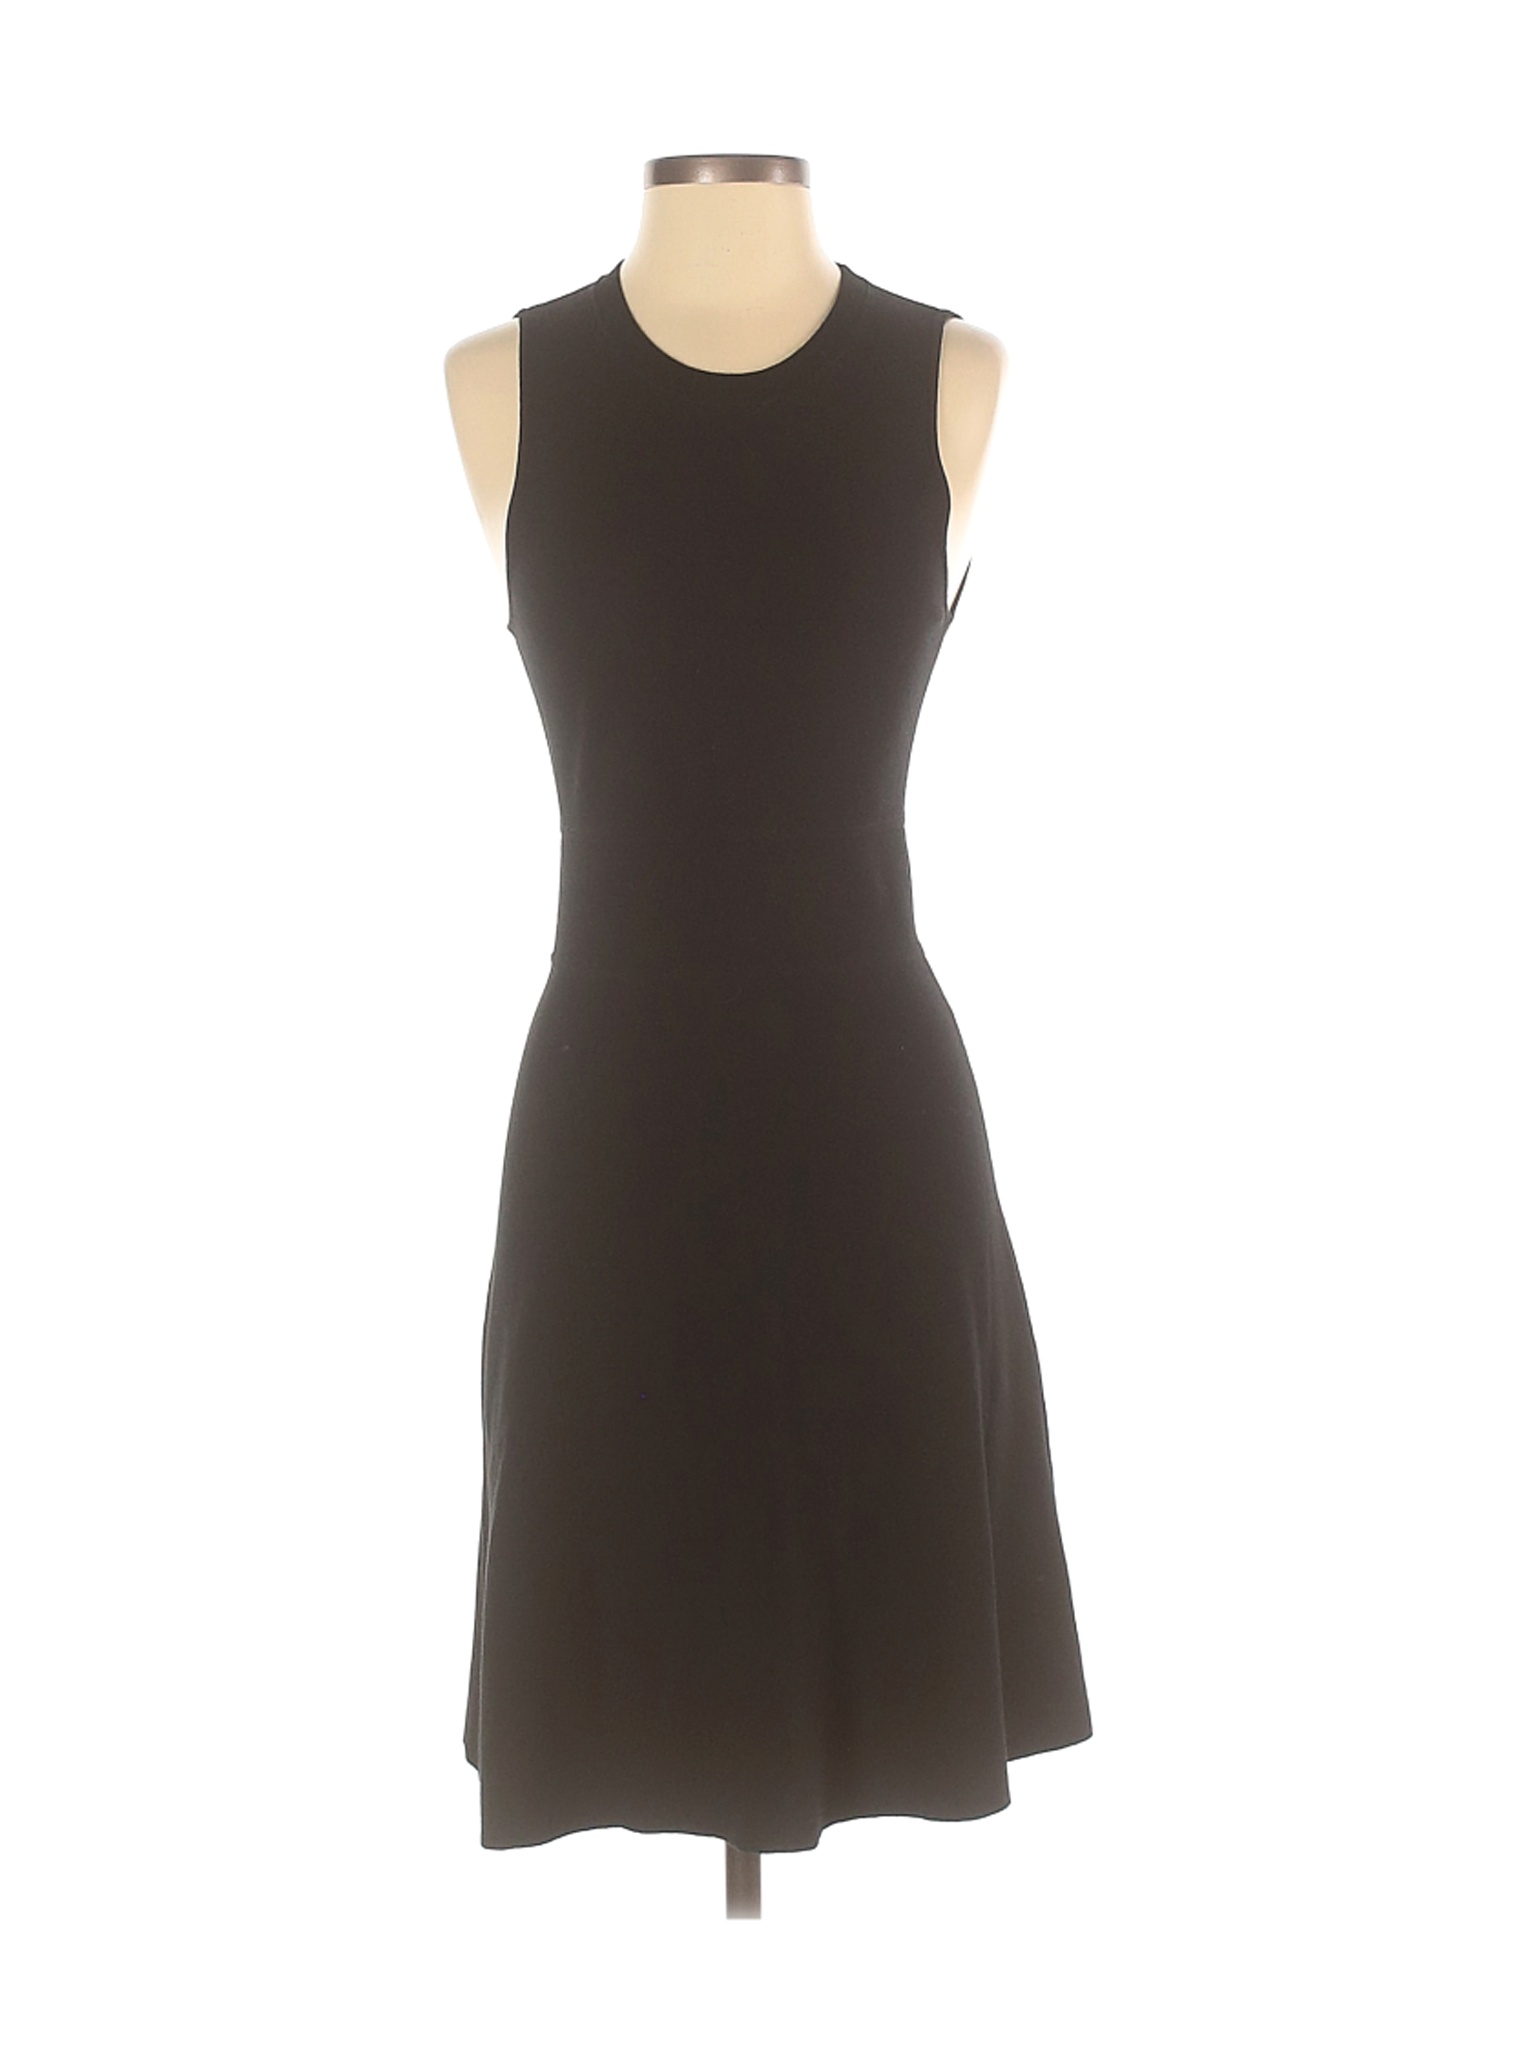 Theory Women Brown Casual Dress S | eBay